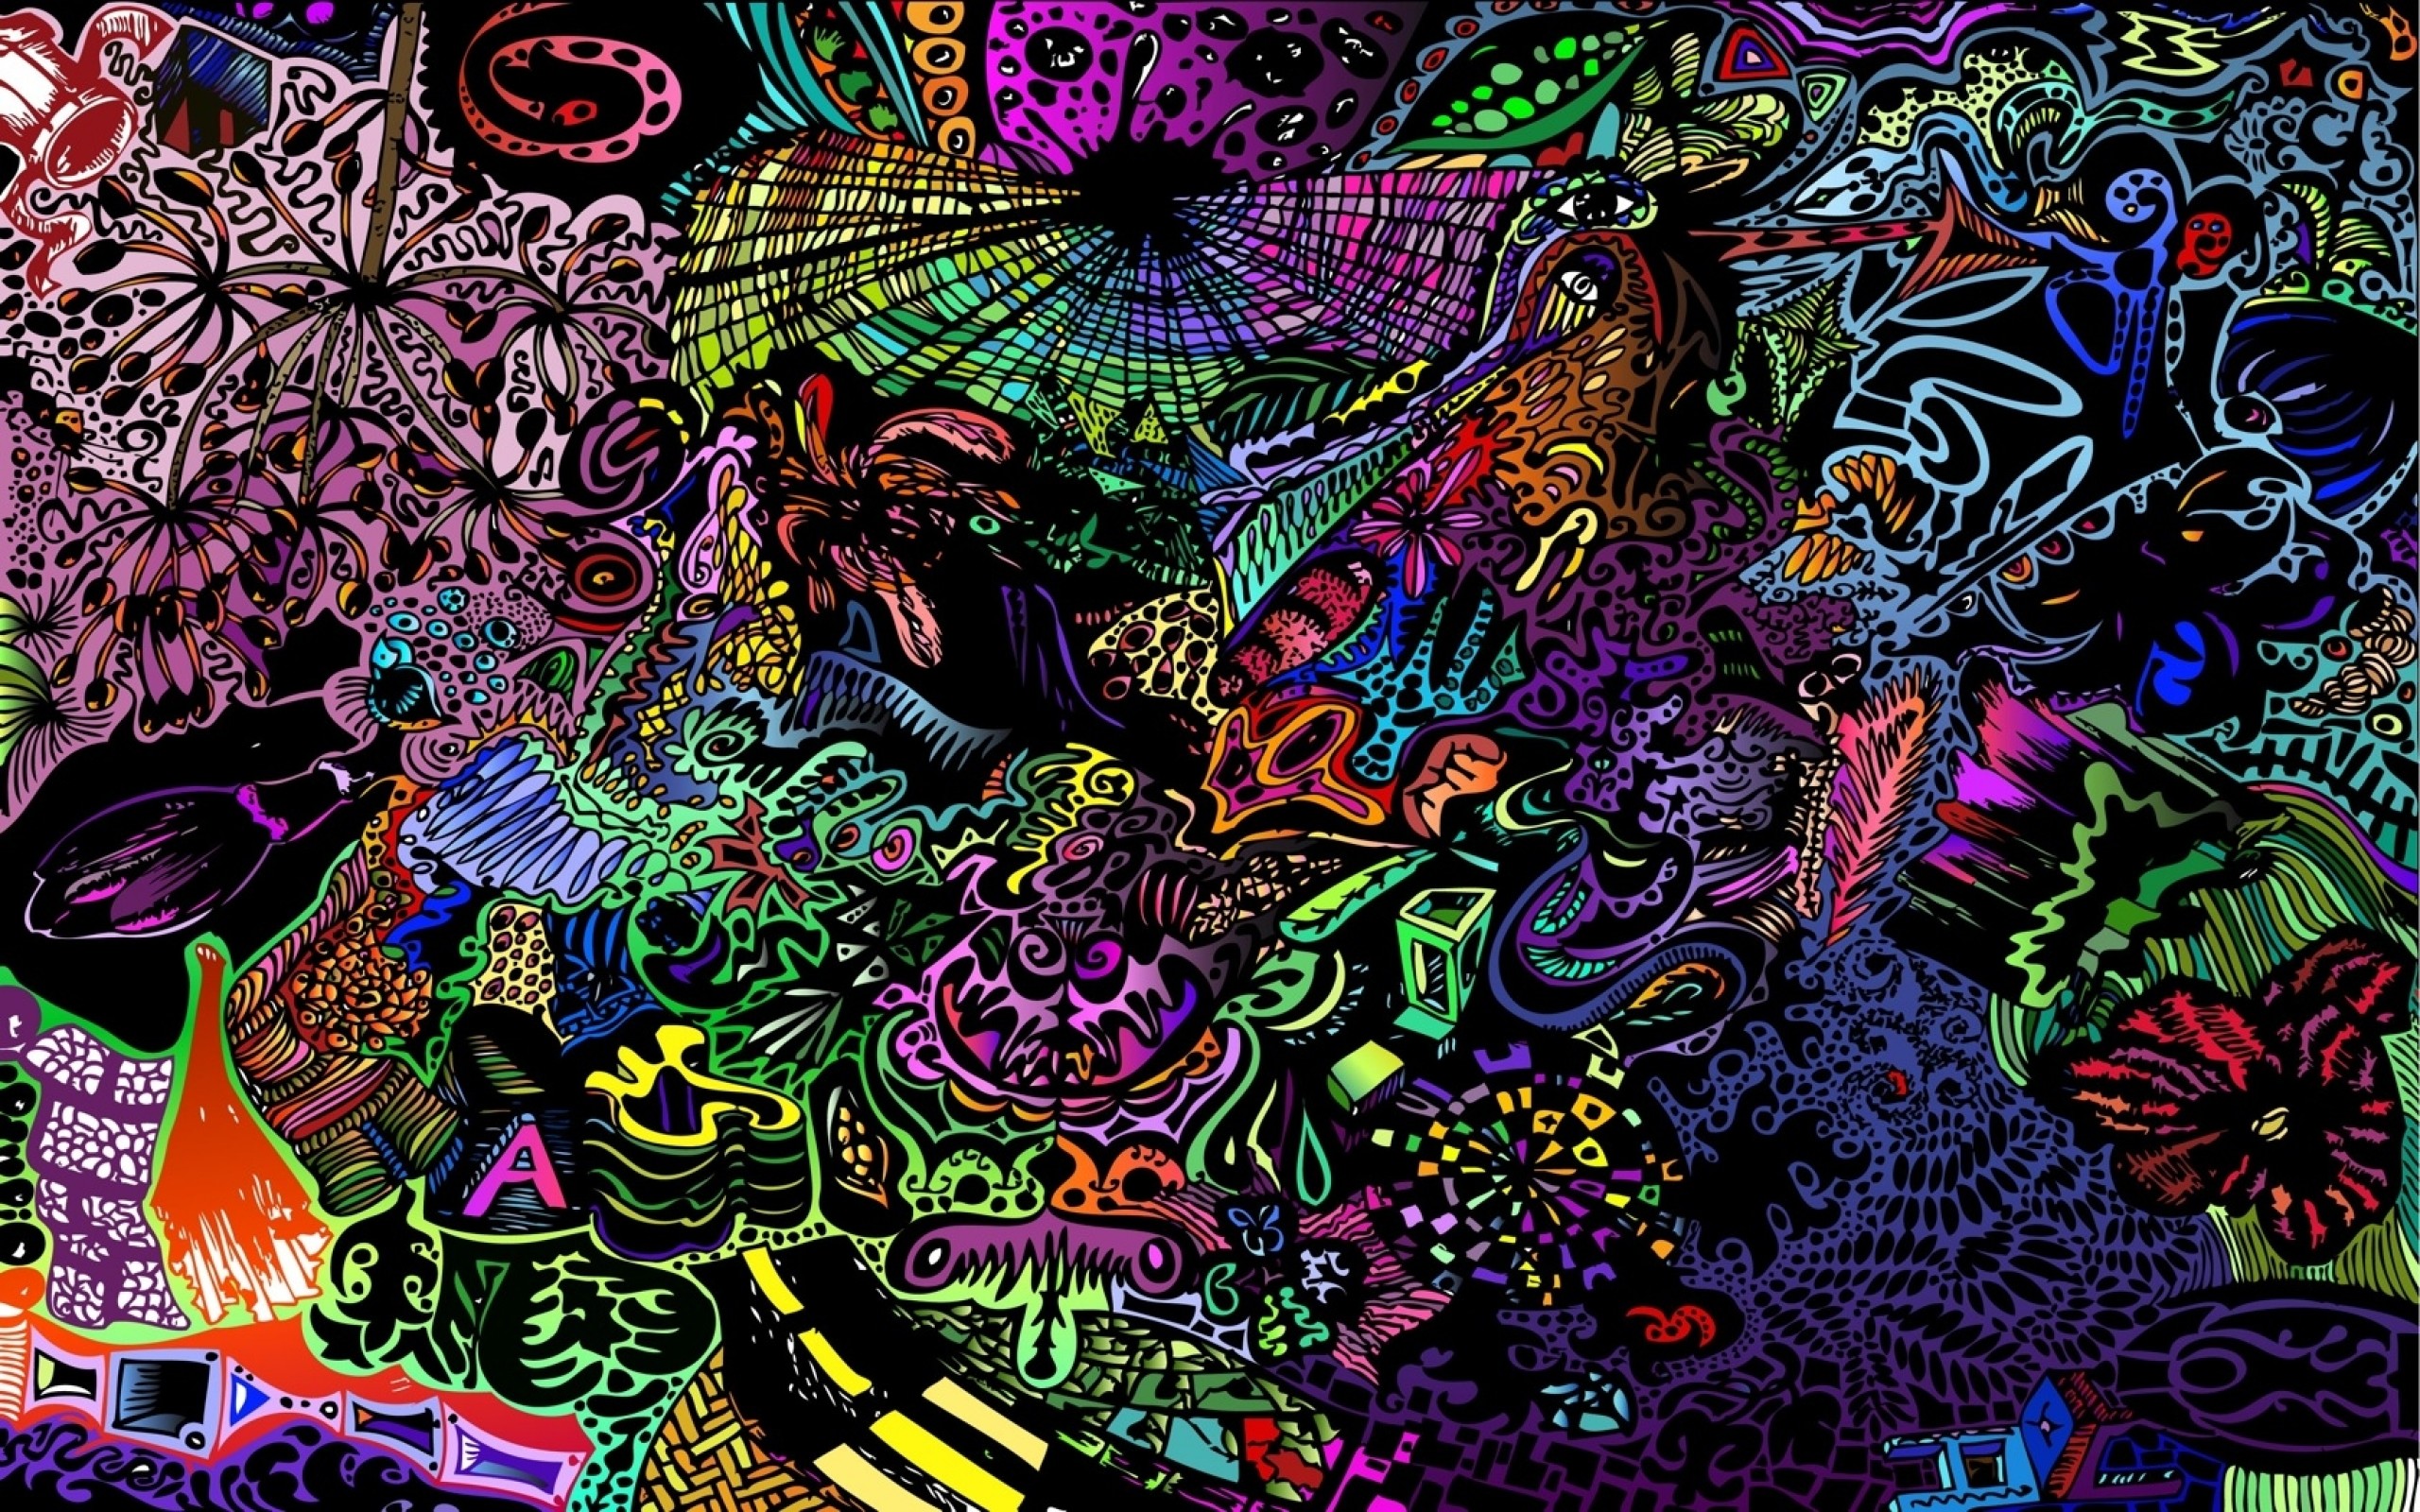 69+] Psychedelic Hd Wallpapers - WallpaperSafari